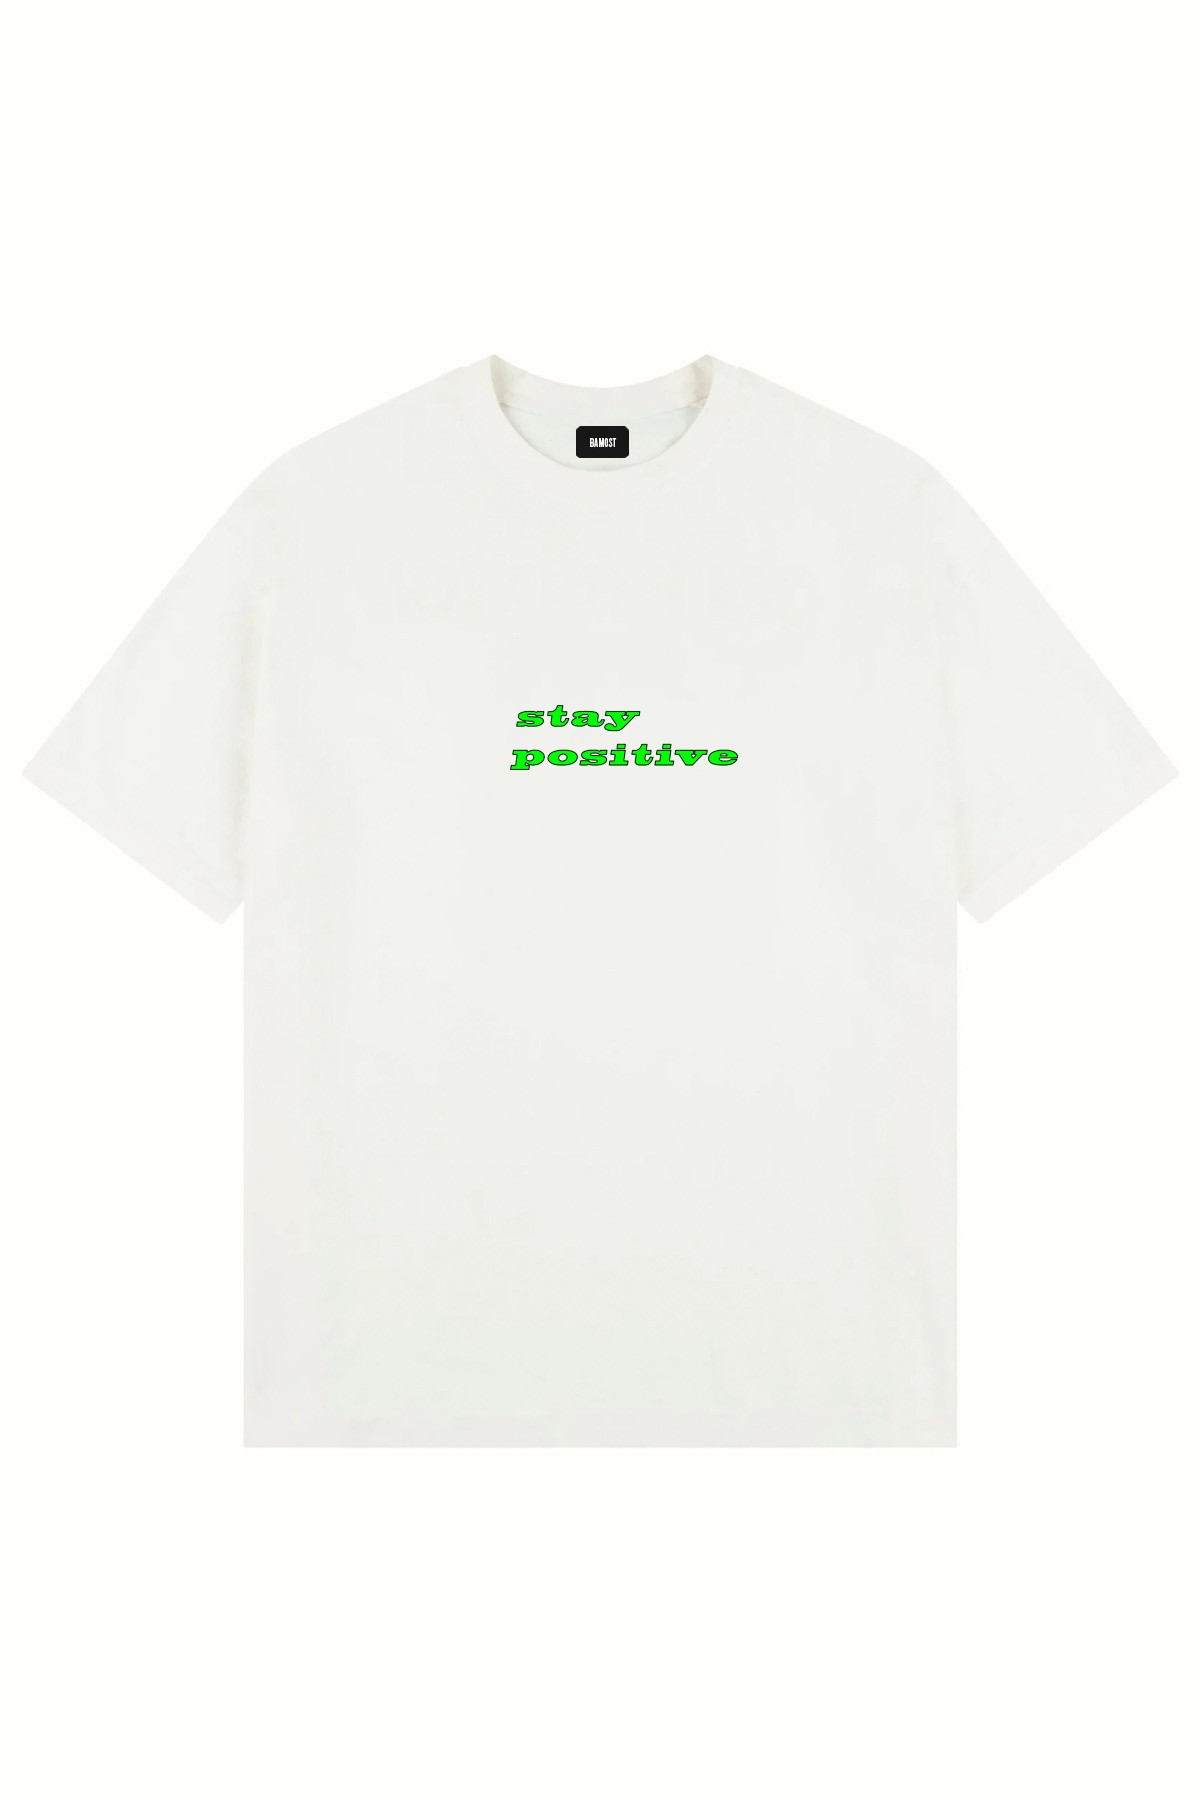 2025 - Oversize Printed T-Shirt - WHITE